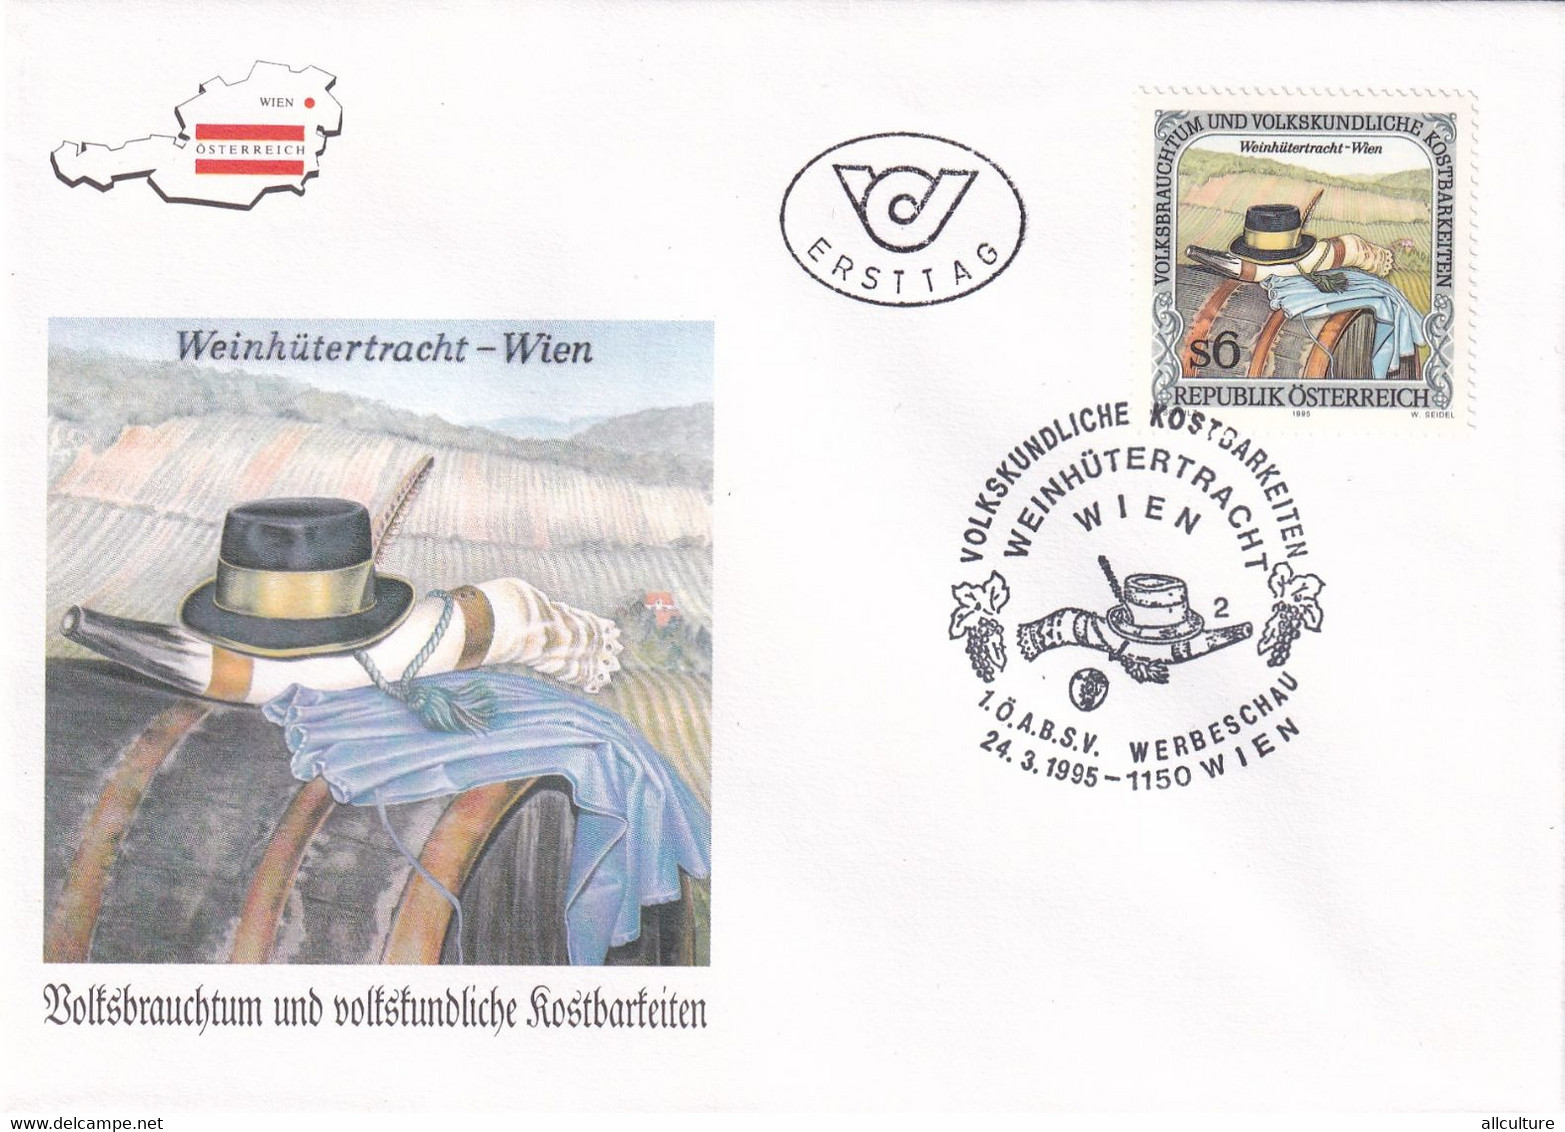 A8187 - WEINHUTERTRACHT, WEIN, ERSTTAG 1995  REPUBLIC OESTERREICH USED STAMP ON COVER AUSTRIA - Covers & Documents